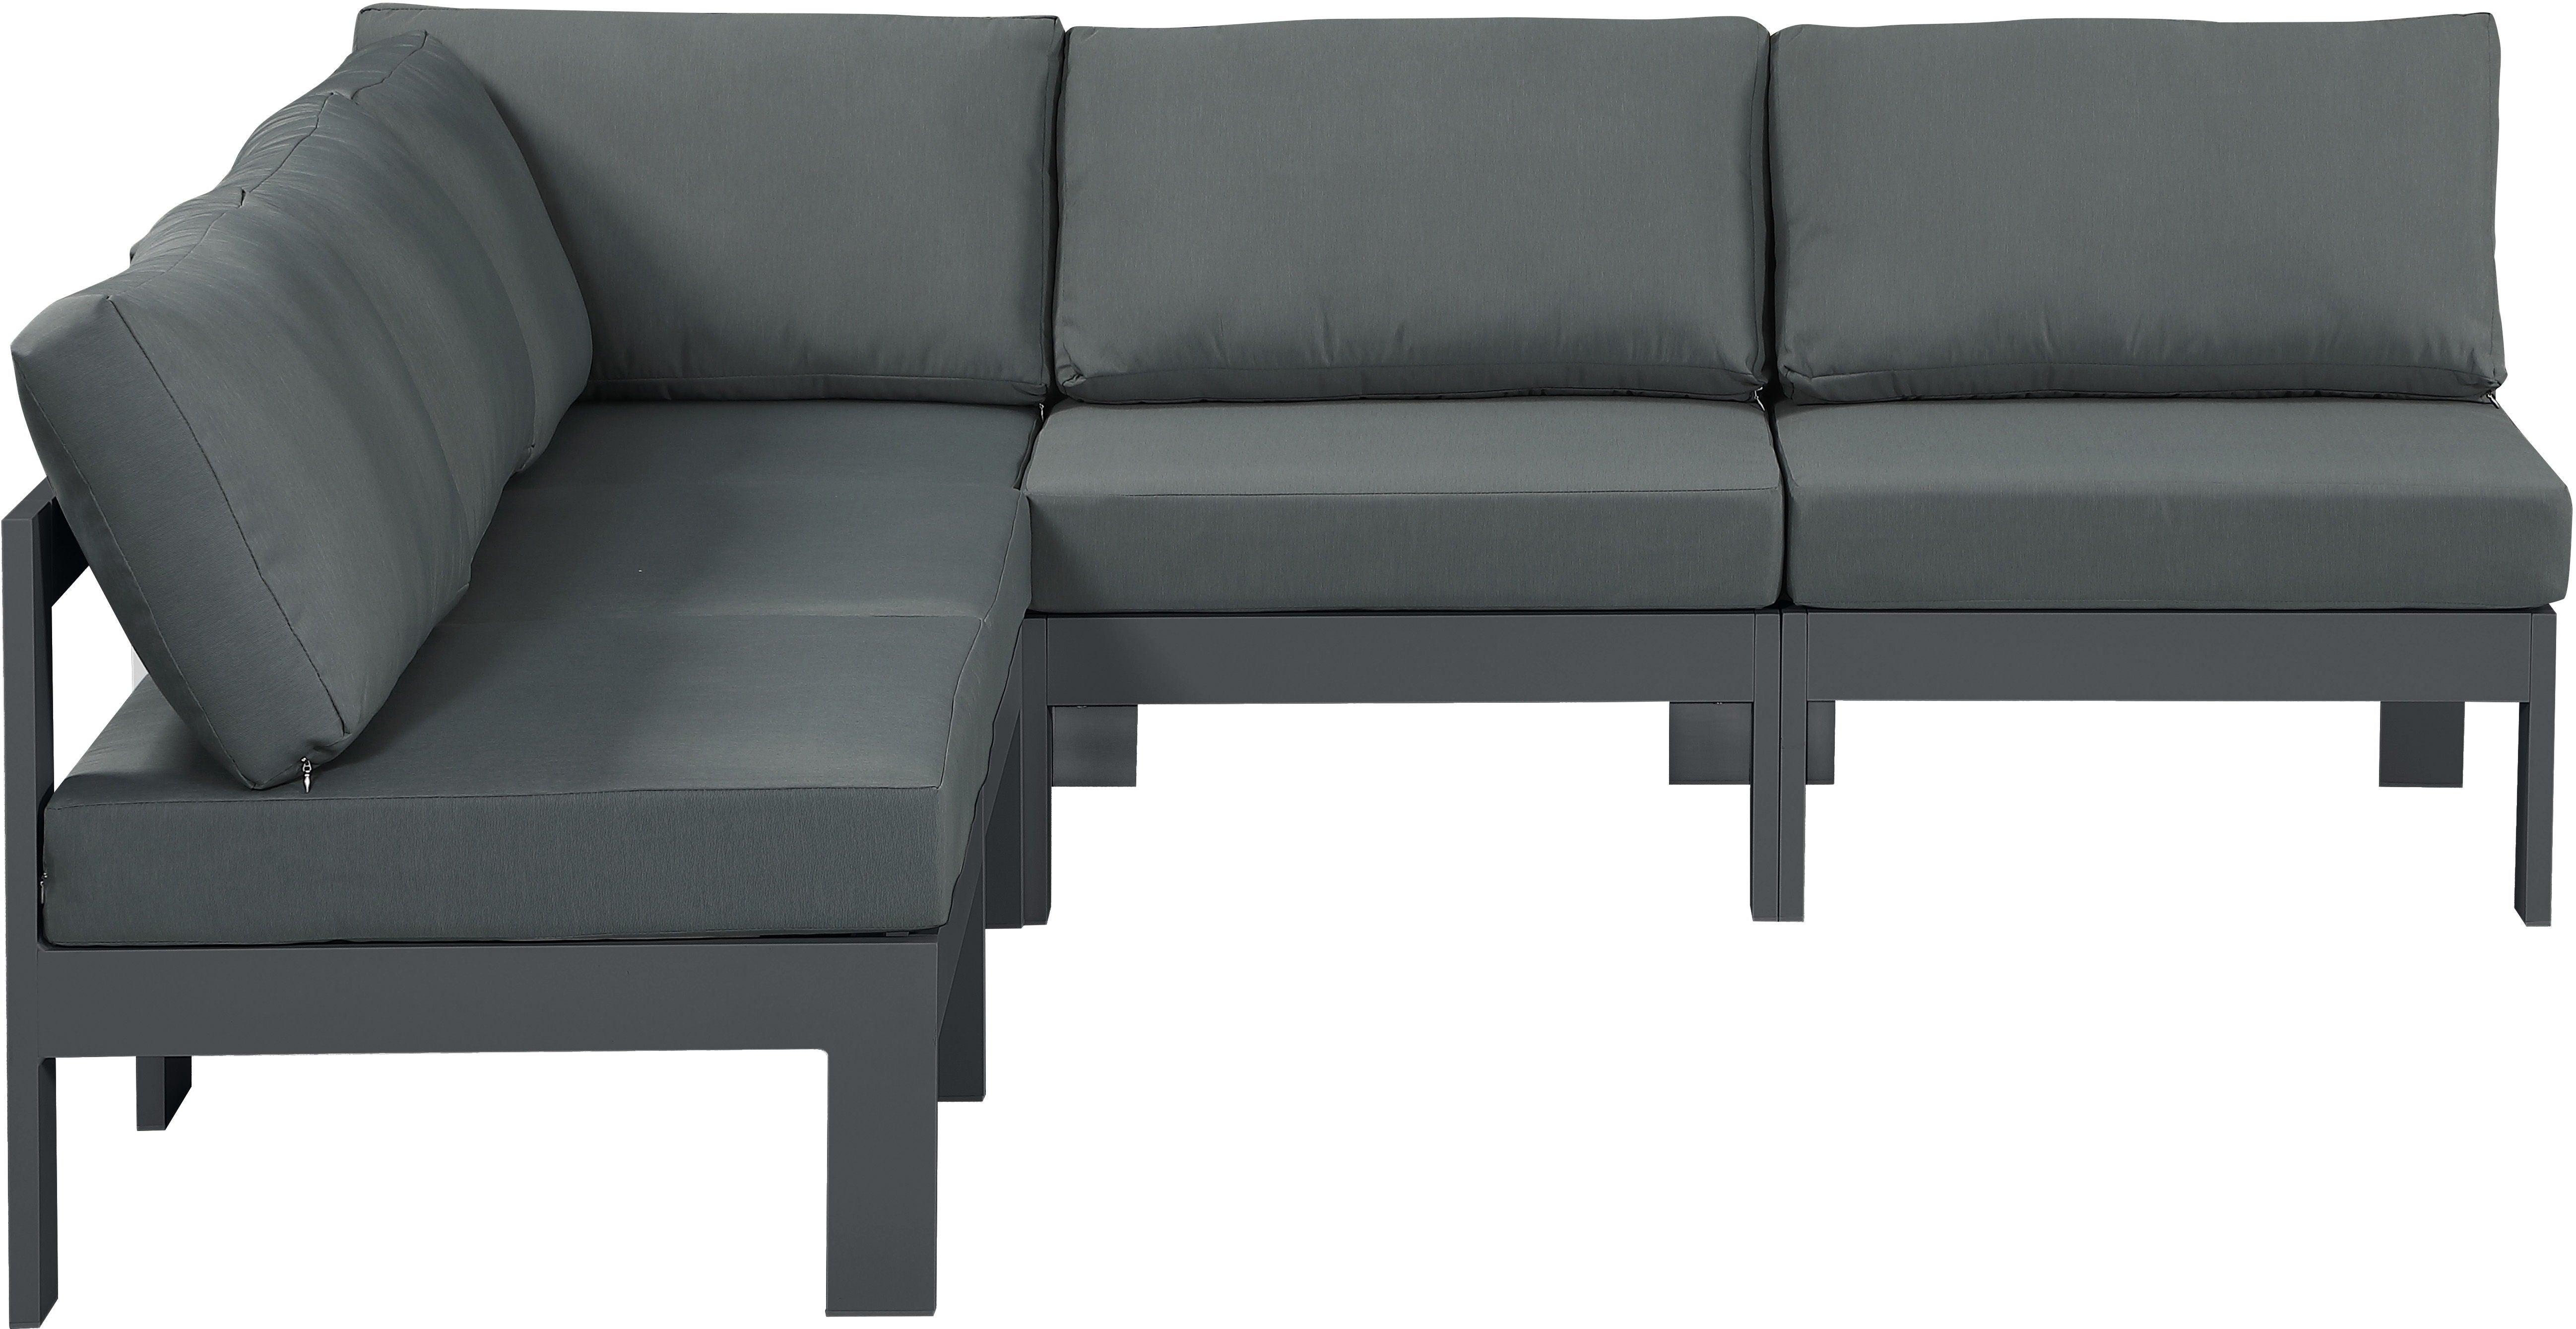 Meridian Furniture - Nizuc - Outdoor Patio Modular Sectional 5 Piece - Dark Grey - 5th Avenue Furniture